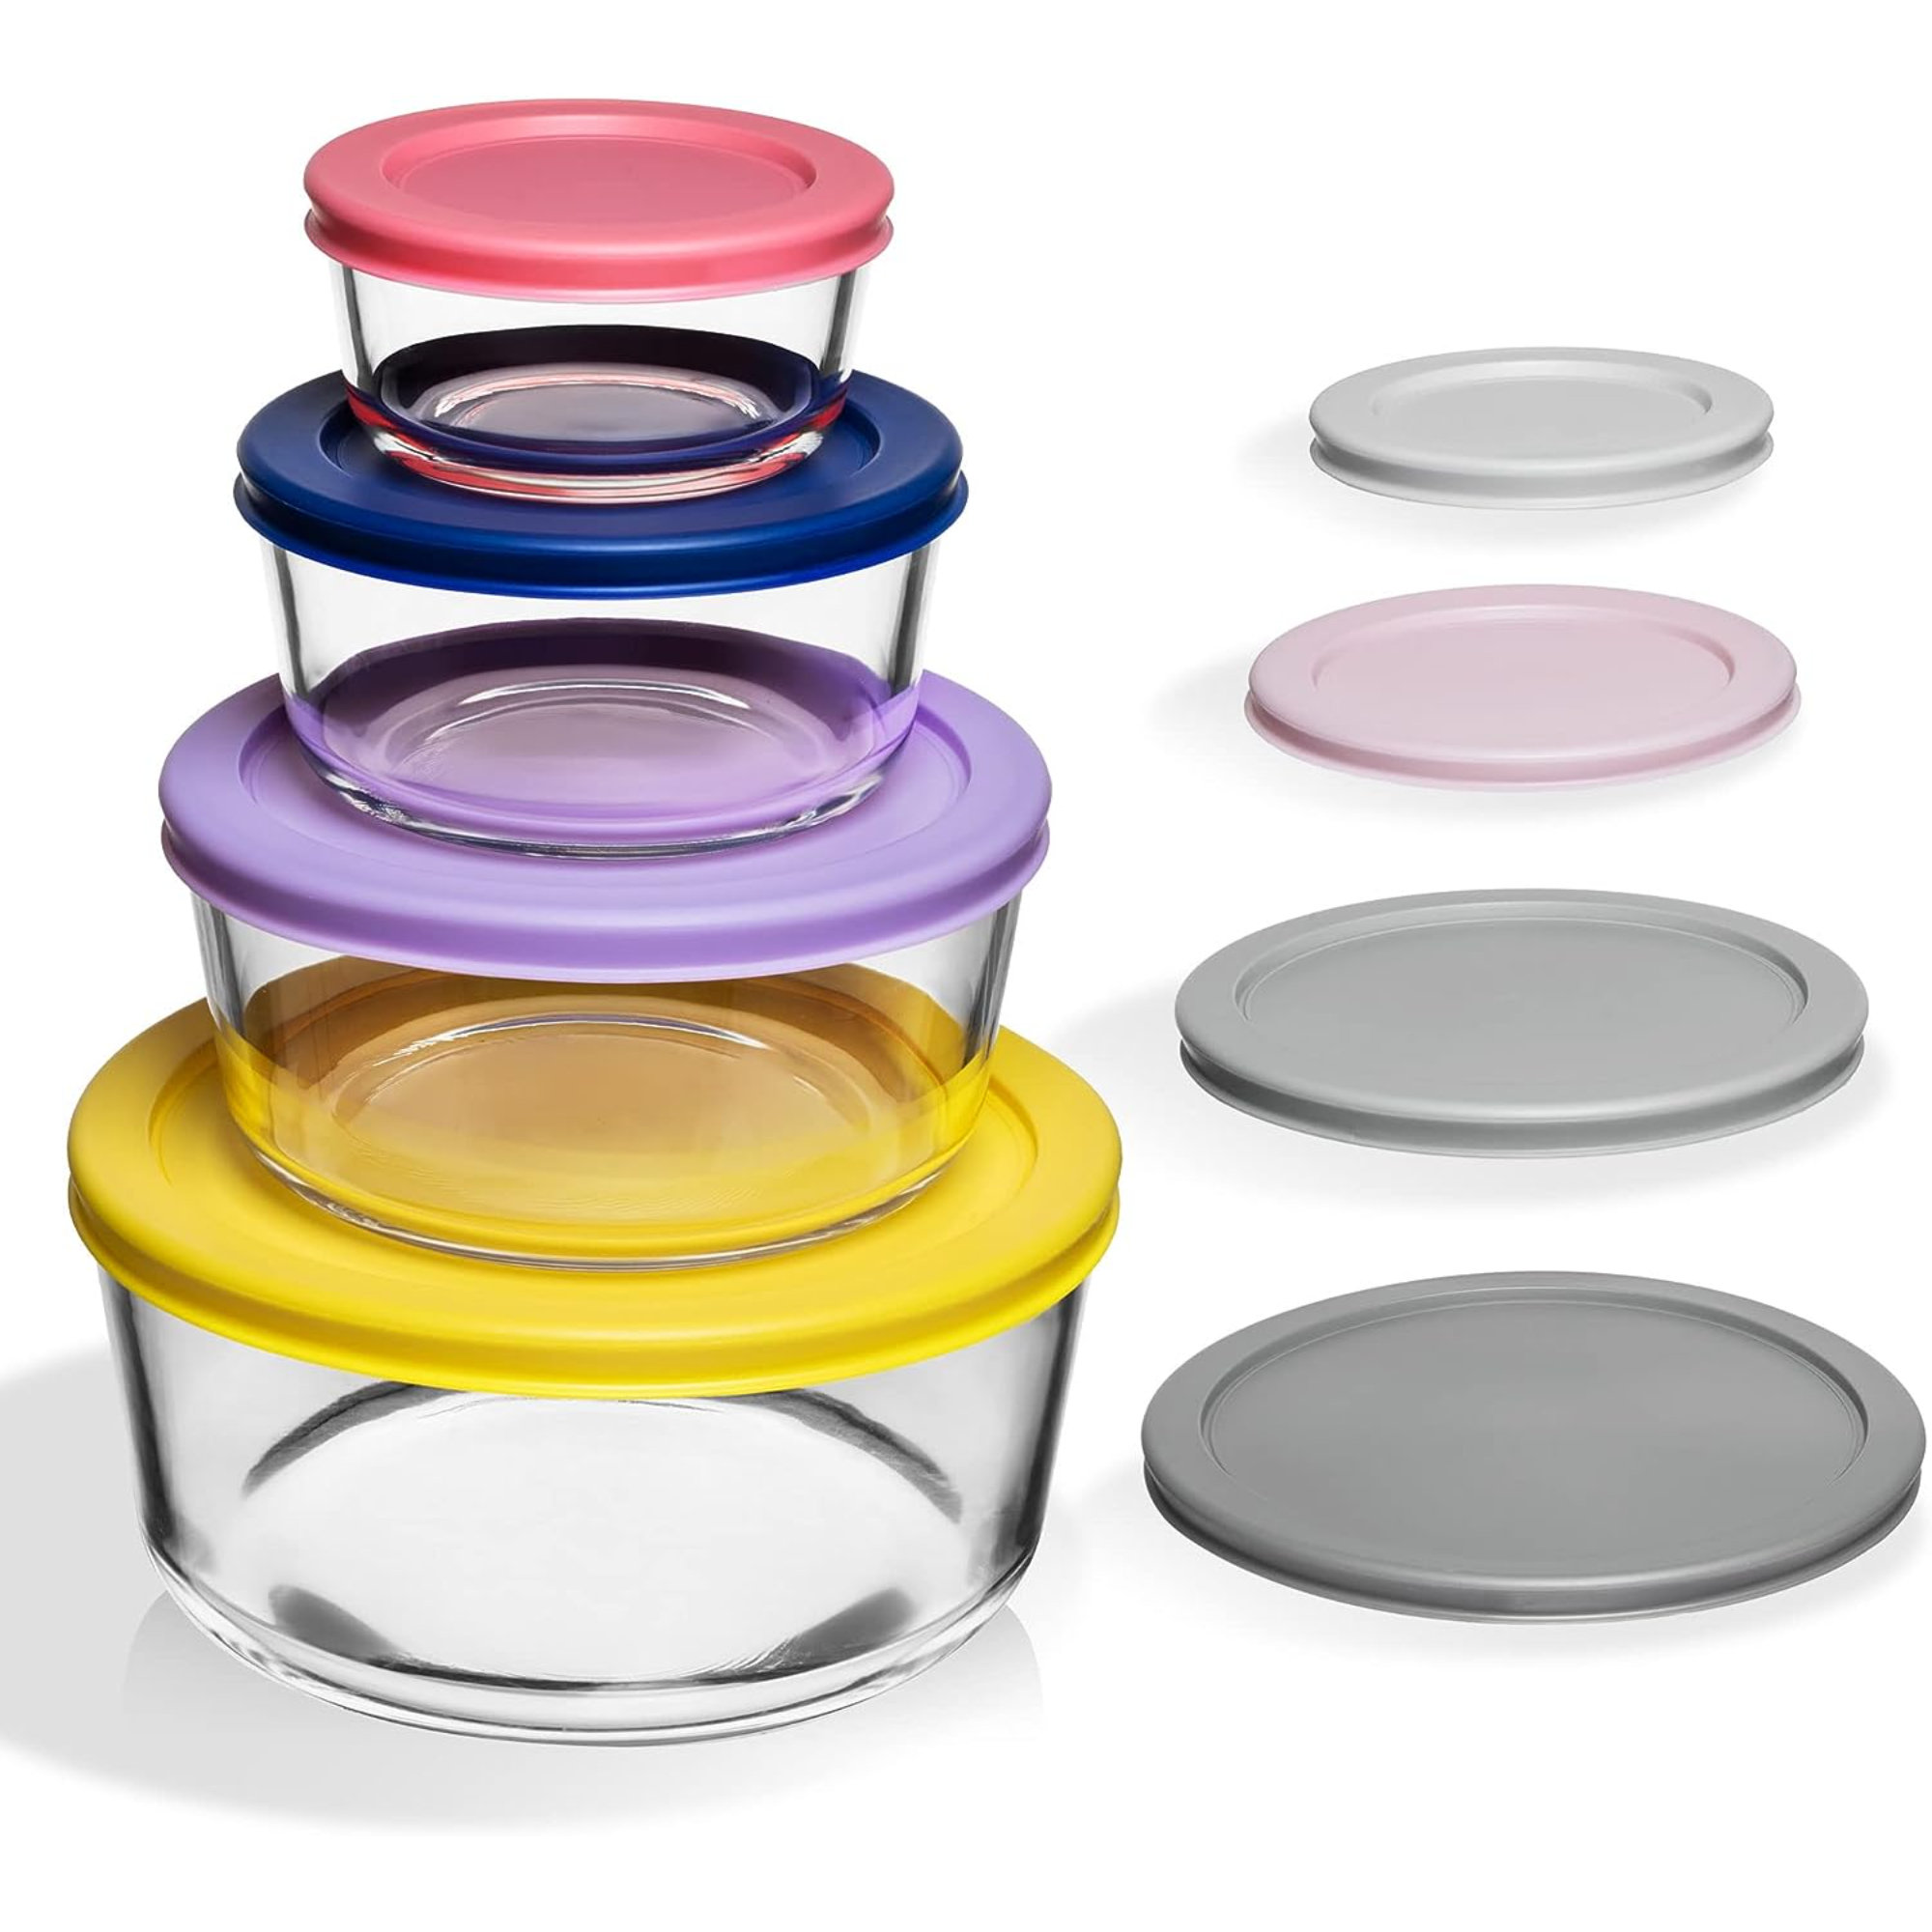 Luminarc Pure Box Active Glass Food Storage 3.4 cup/27.2 oz. & Reviews